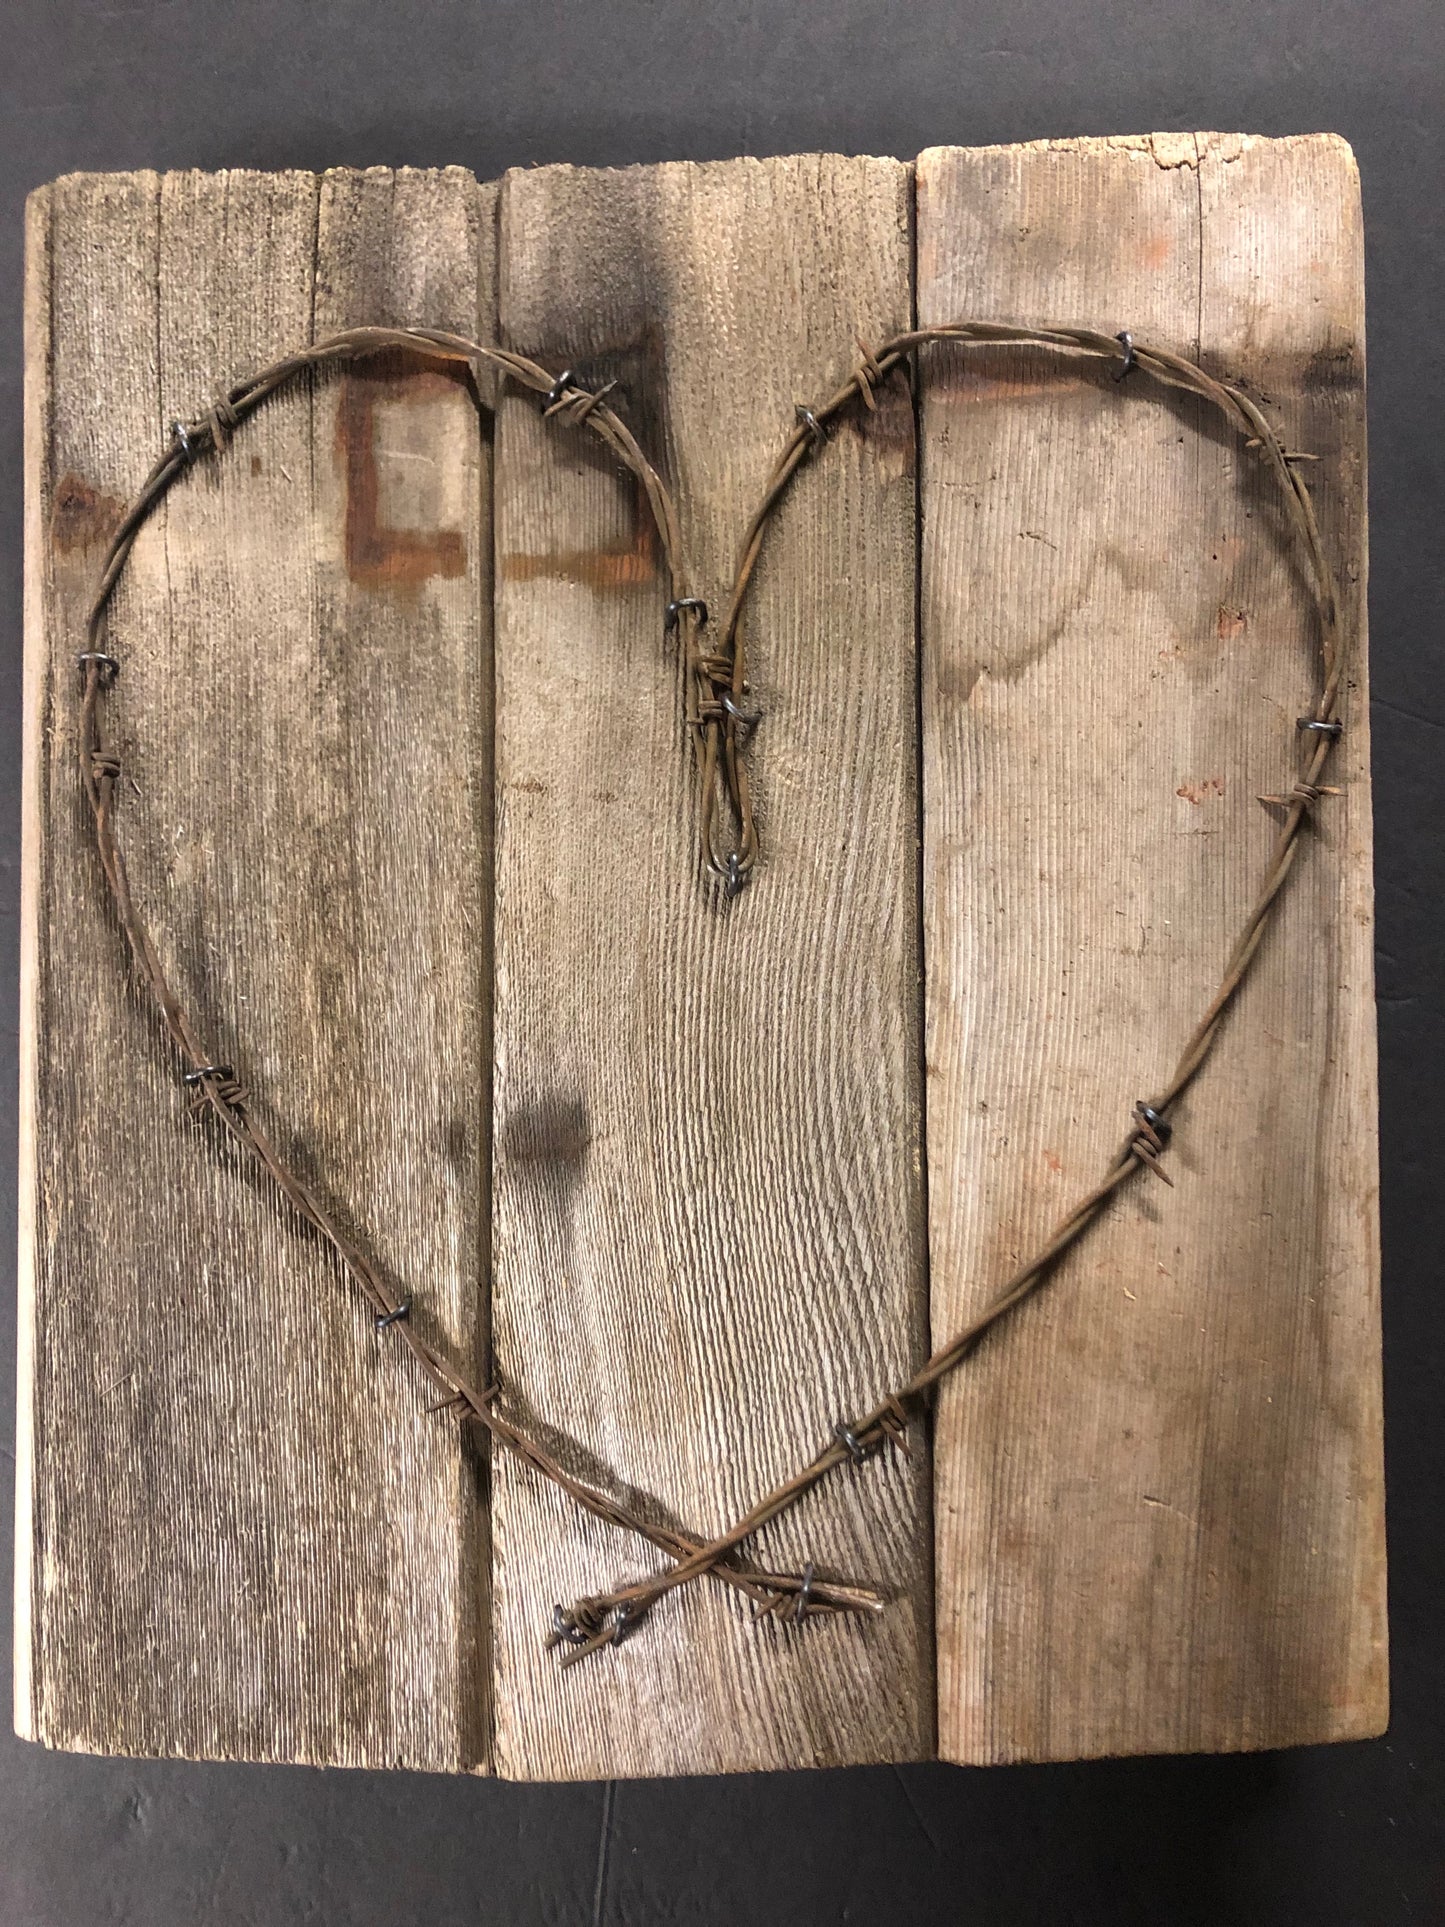 Winston Smith "Spiky Love" Barbwire on Wood